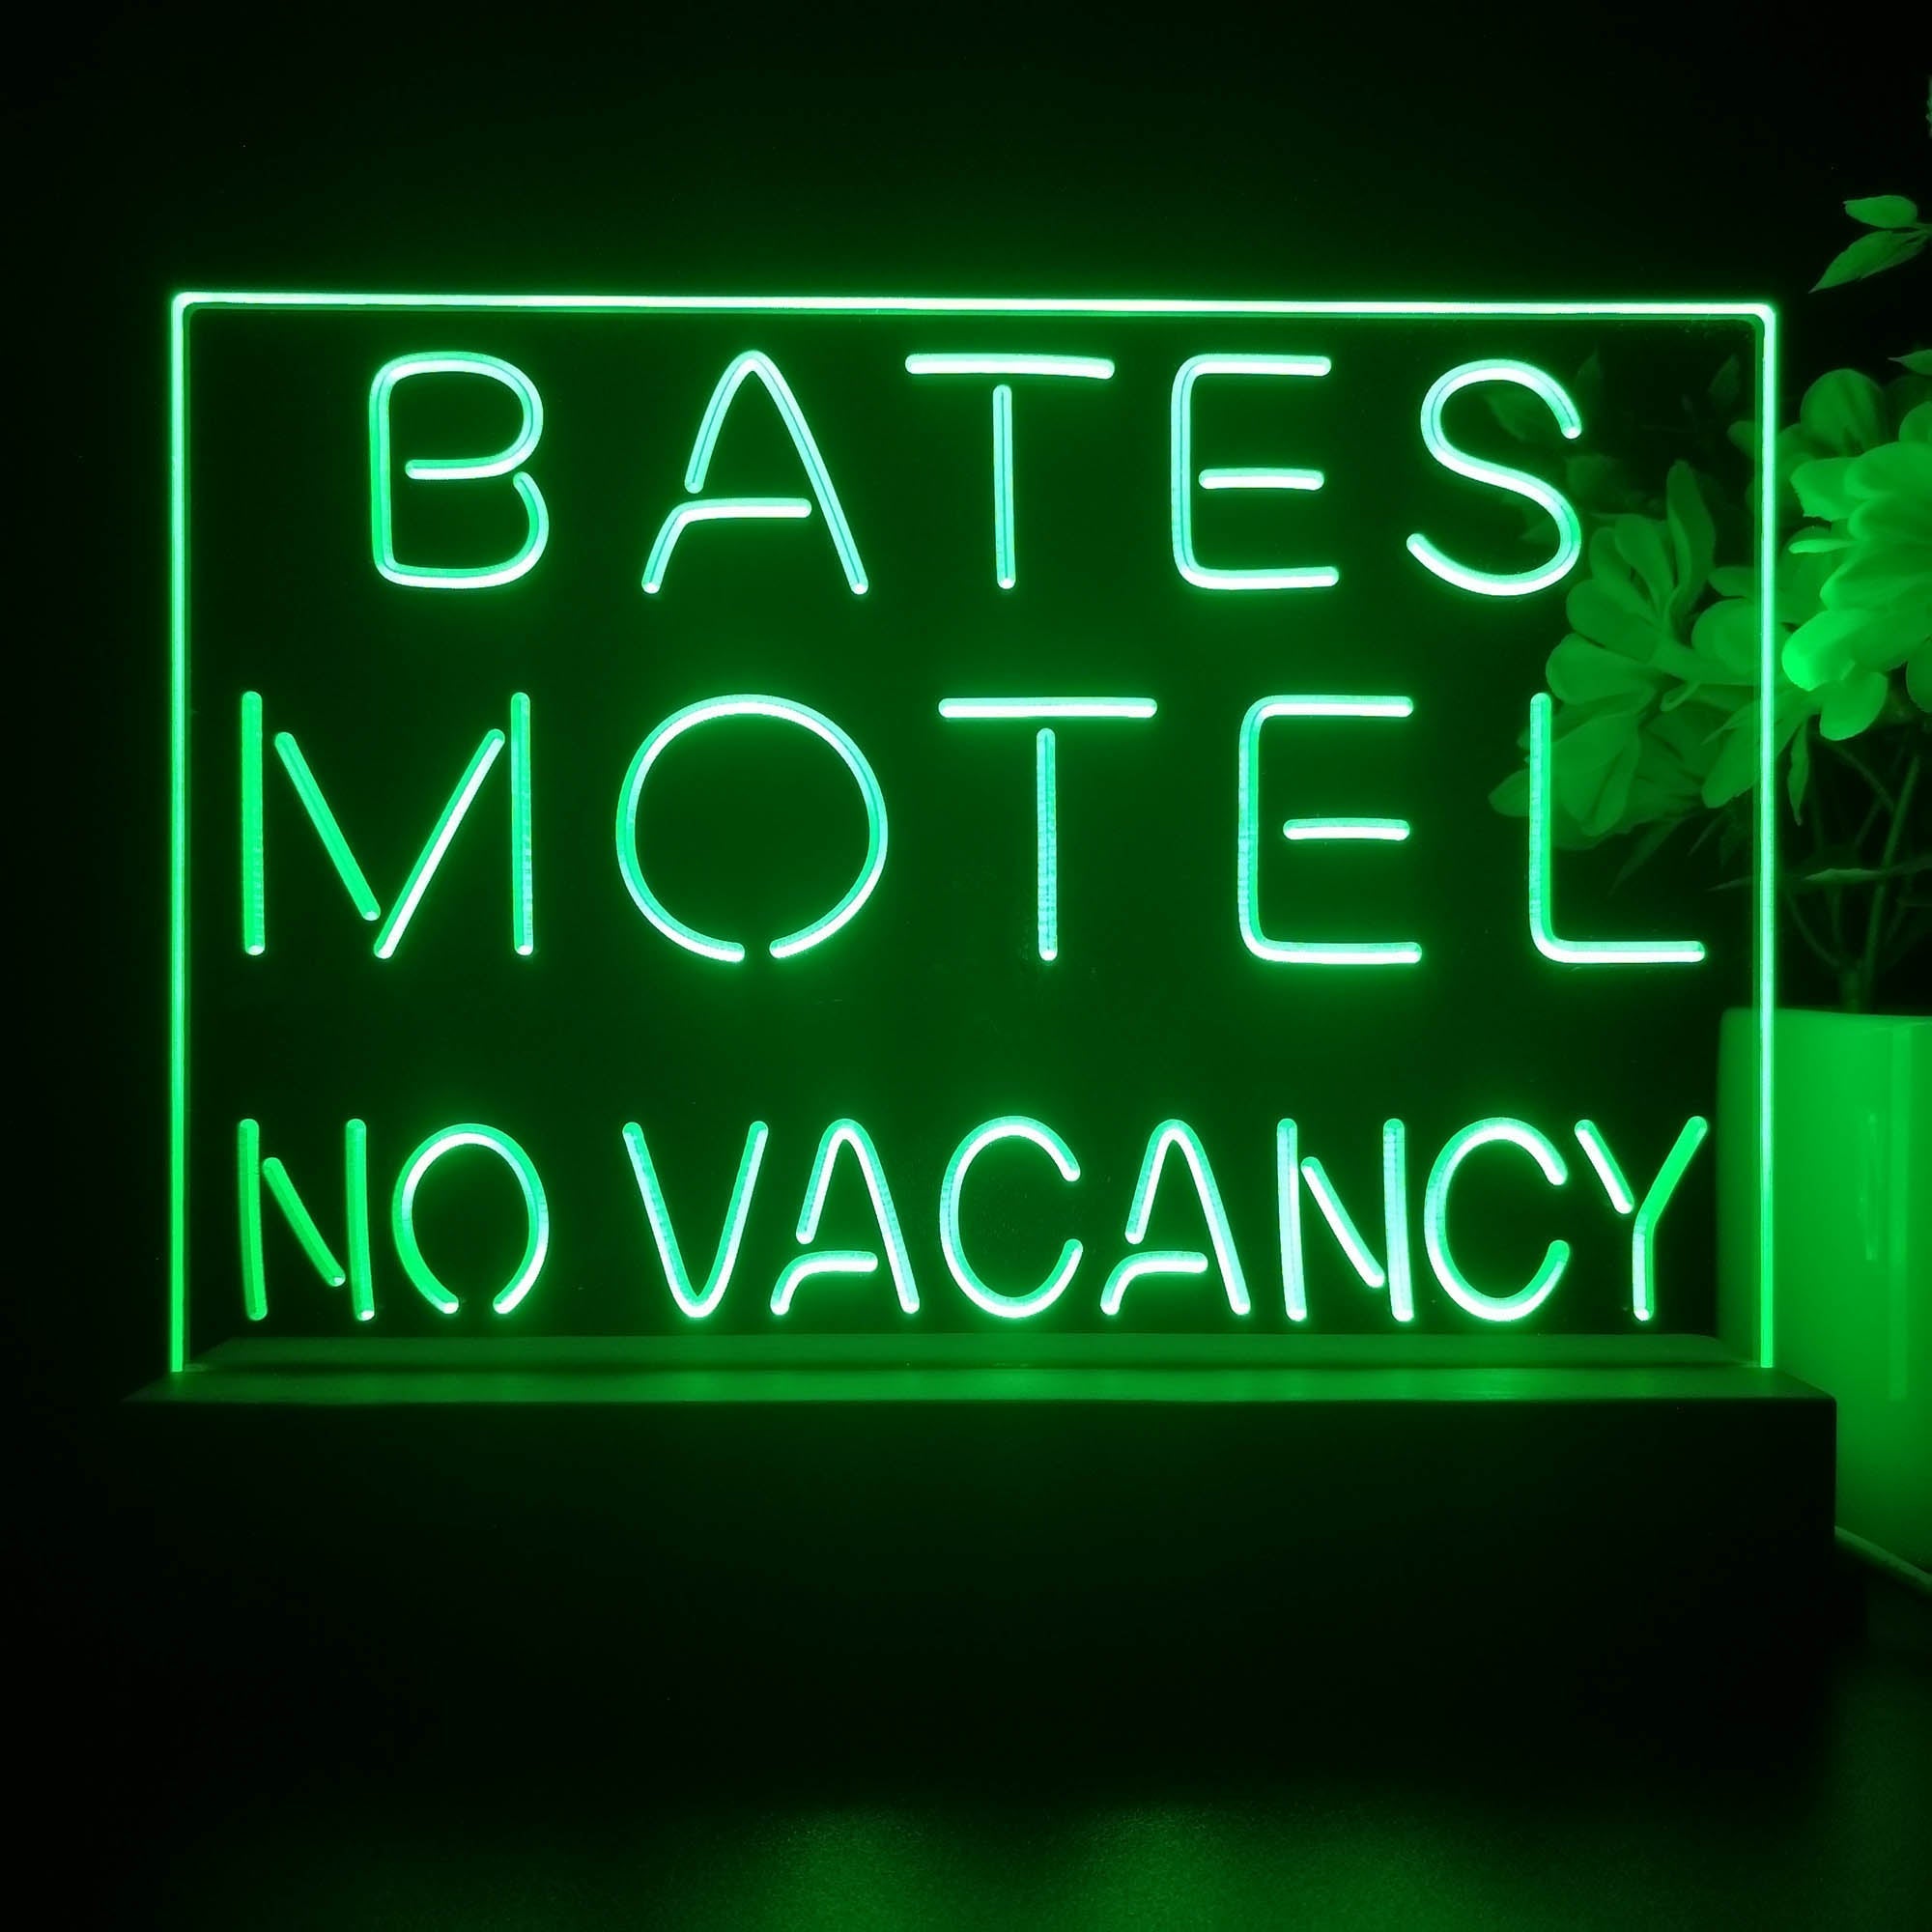 Bates Motel No Vacancy 3D Illusion Night Light Desk Lamp